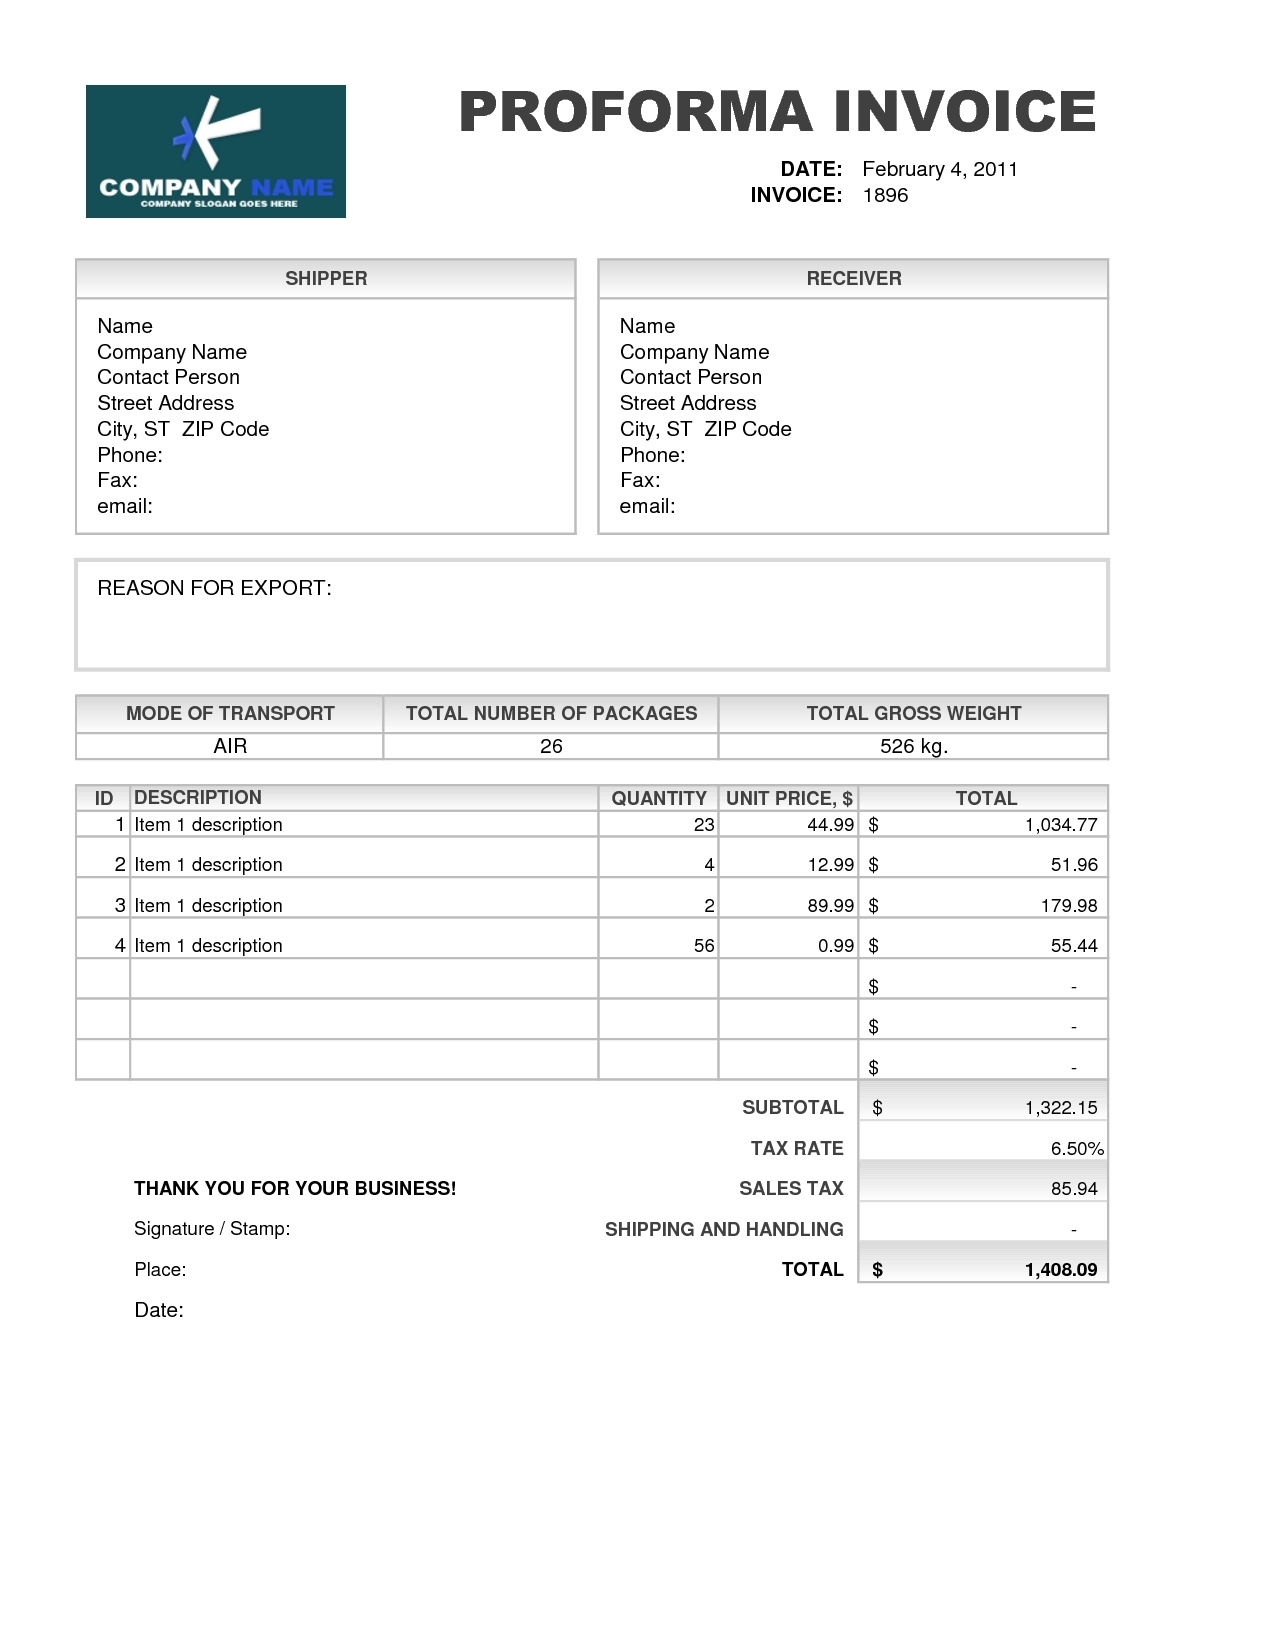 samples of proforma invoice invoice template free 2016 proforma invoice form